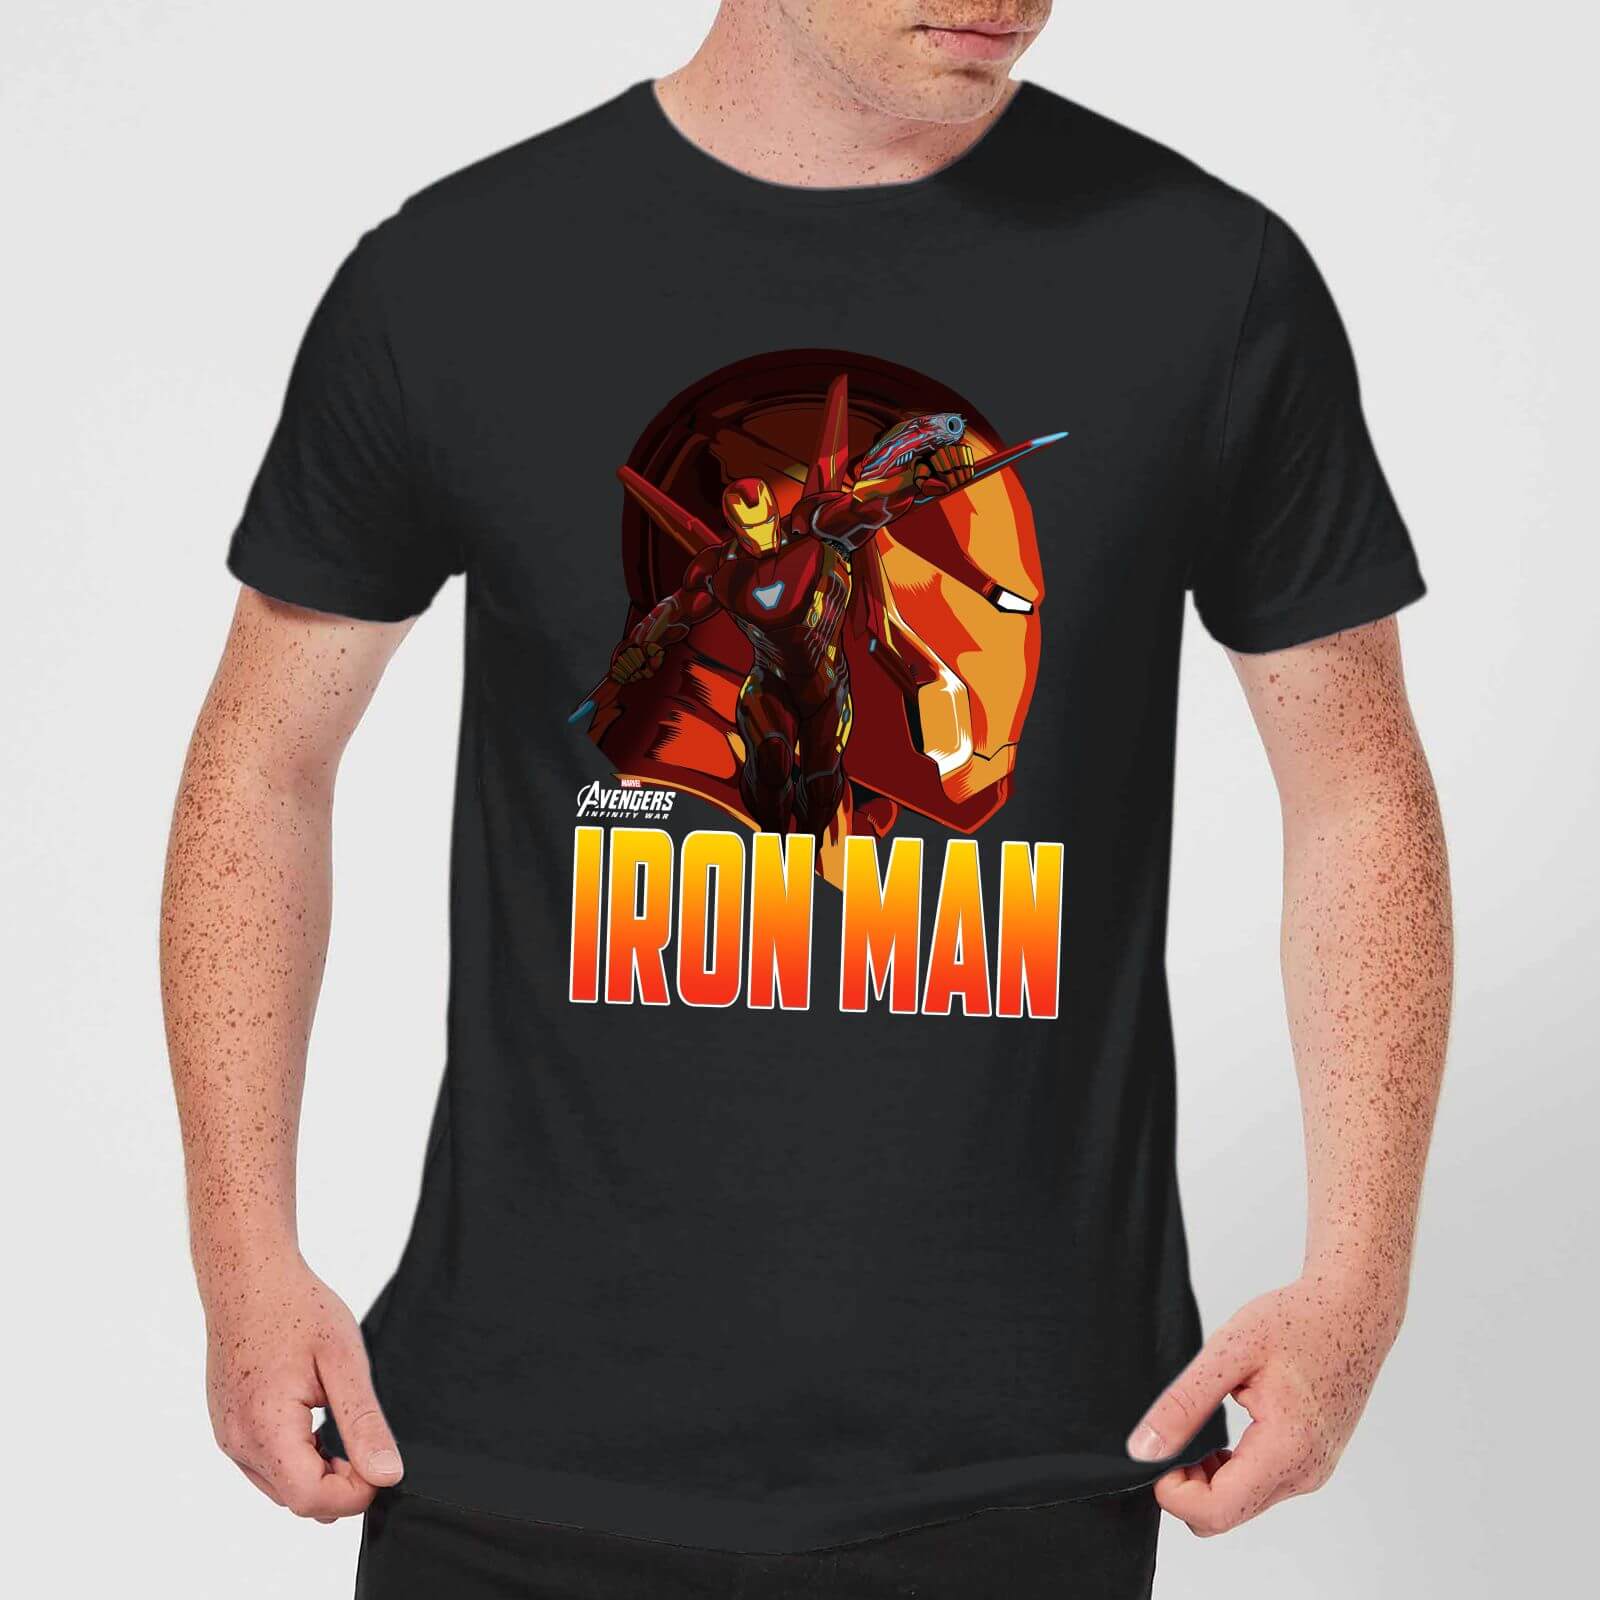 Avengers Iron Man Herren T-Shirt - Schwarz - S